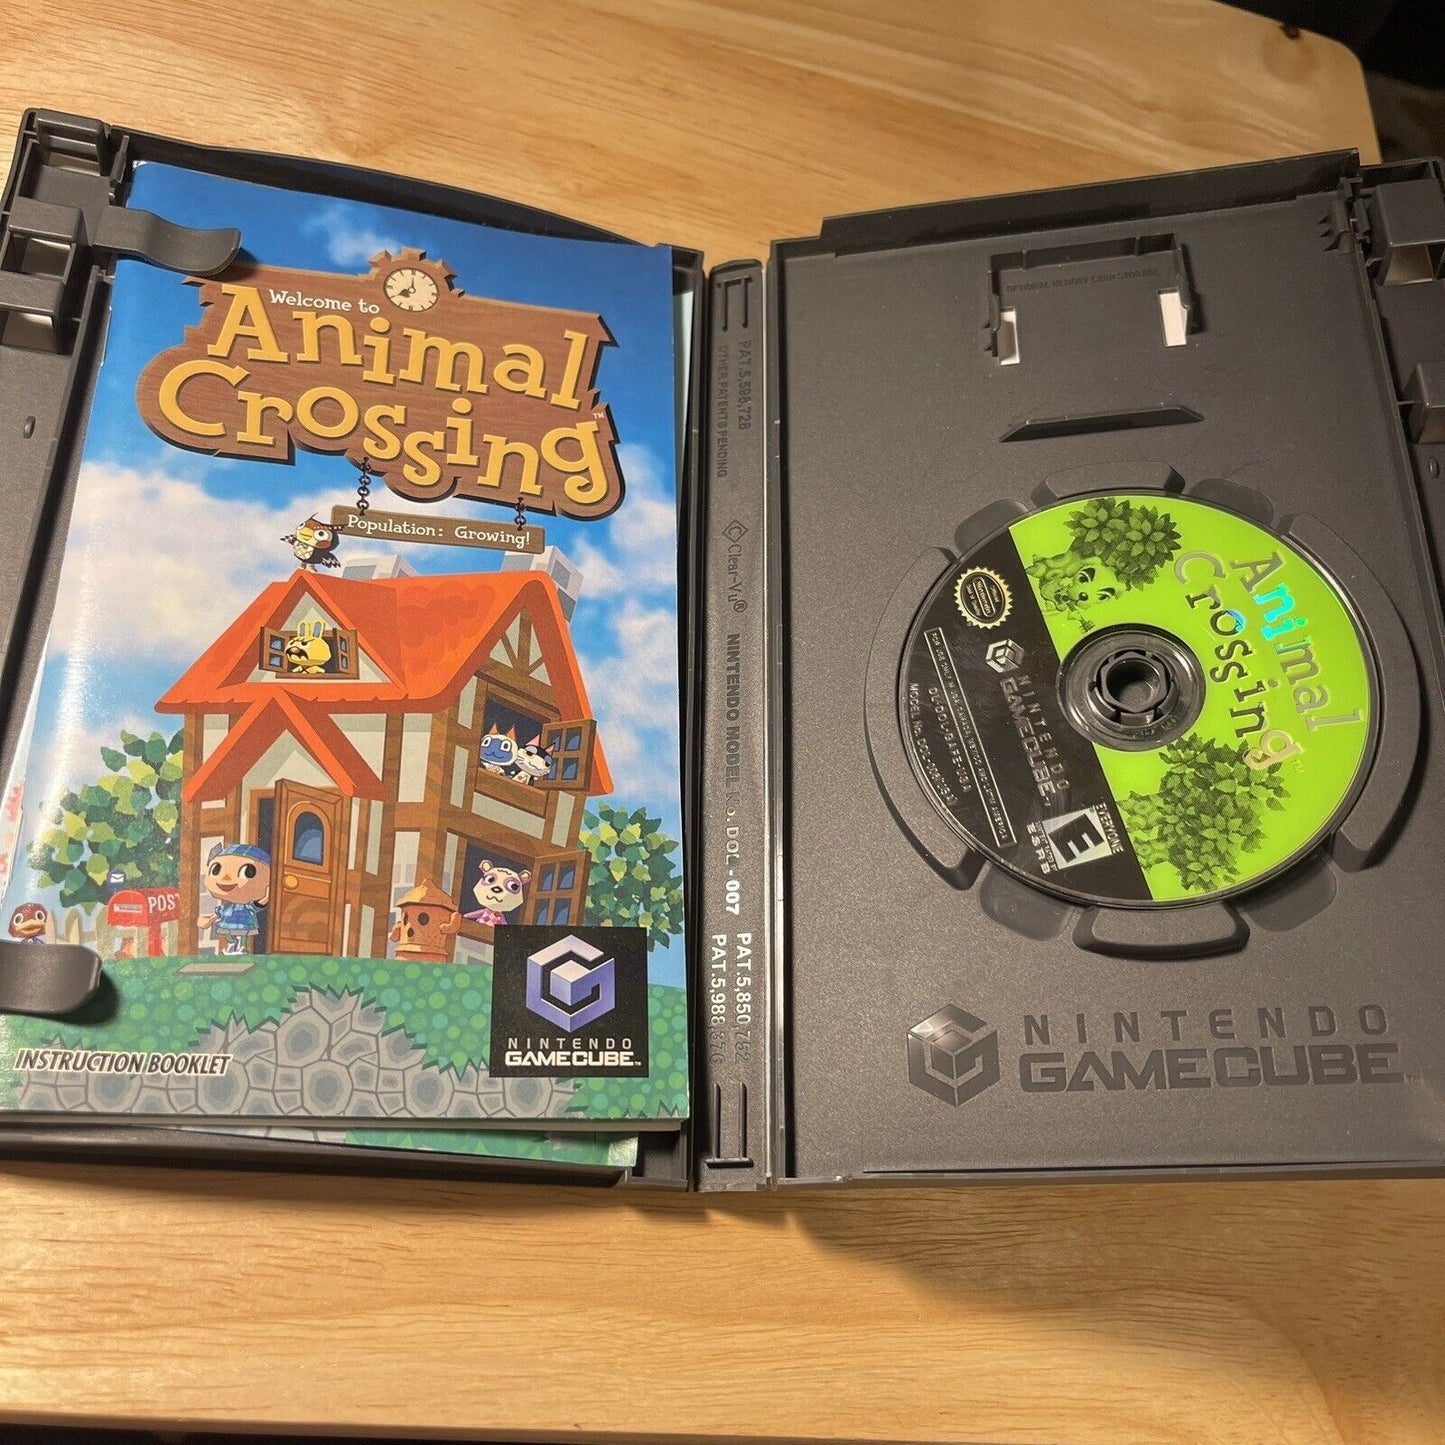 Animal Crossing (Nintendo GameCube, 2002)